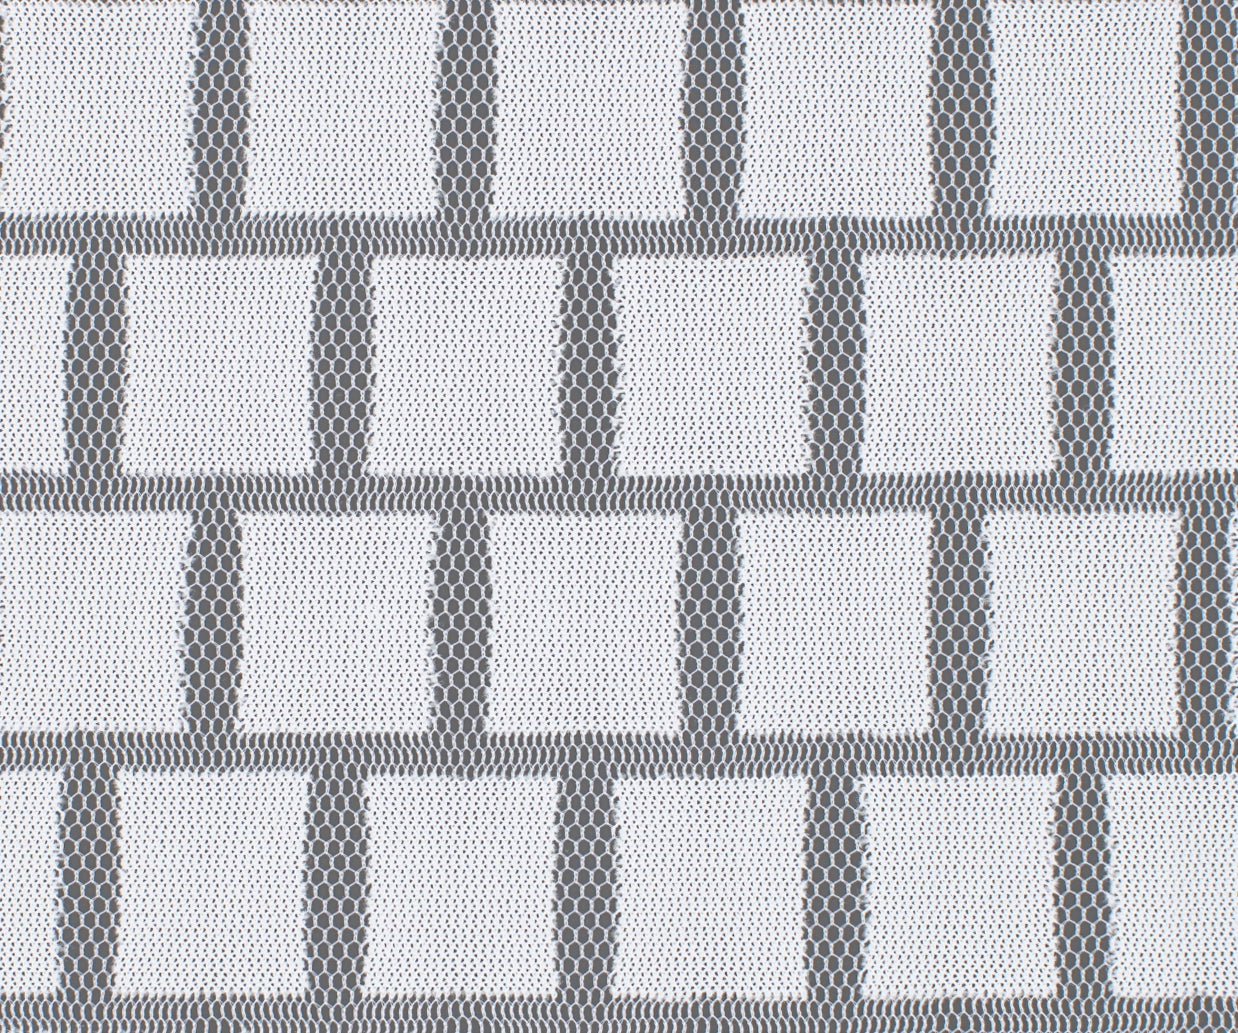 14029-01 White Knit Mesh Square Pattern Burn-Out Plain Dyed Blend blend block burn-out knit mesh nylon plain dyed polyester white Burn-Out, Mesh - knit fabric - woven fabric - fabric company - fabric wholesale - fabric b2b - fabric factory - high quality fabric - hong kong fabric - fabric hk - acetate fabric - cotton fabric - linen fabric - metallic fabric - nylon fabric - polyester fabric - spandex fabric - chun wing hing - cwh hk - fabric worldwide ship - 針織布 - 梳織布 - 布料公司- 布料批發 - 香港布料 - 秦榮興